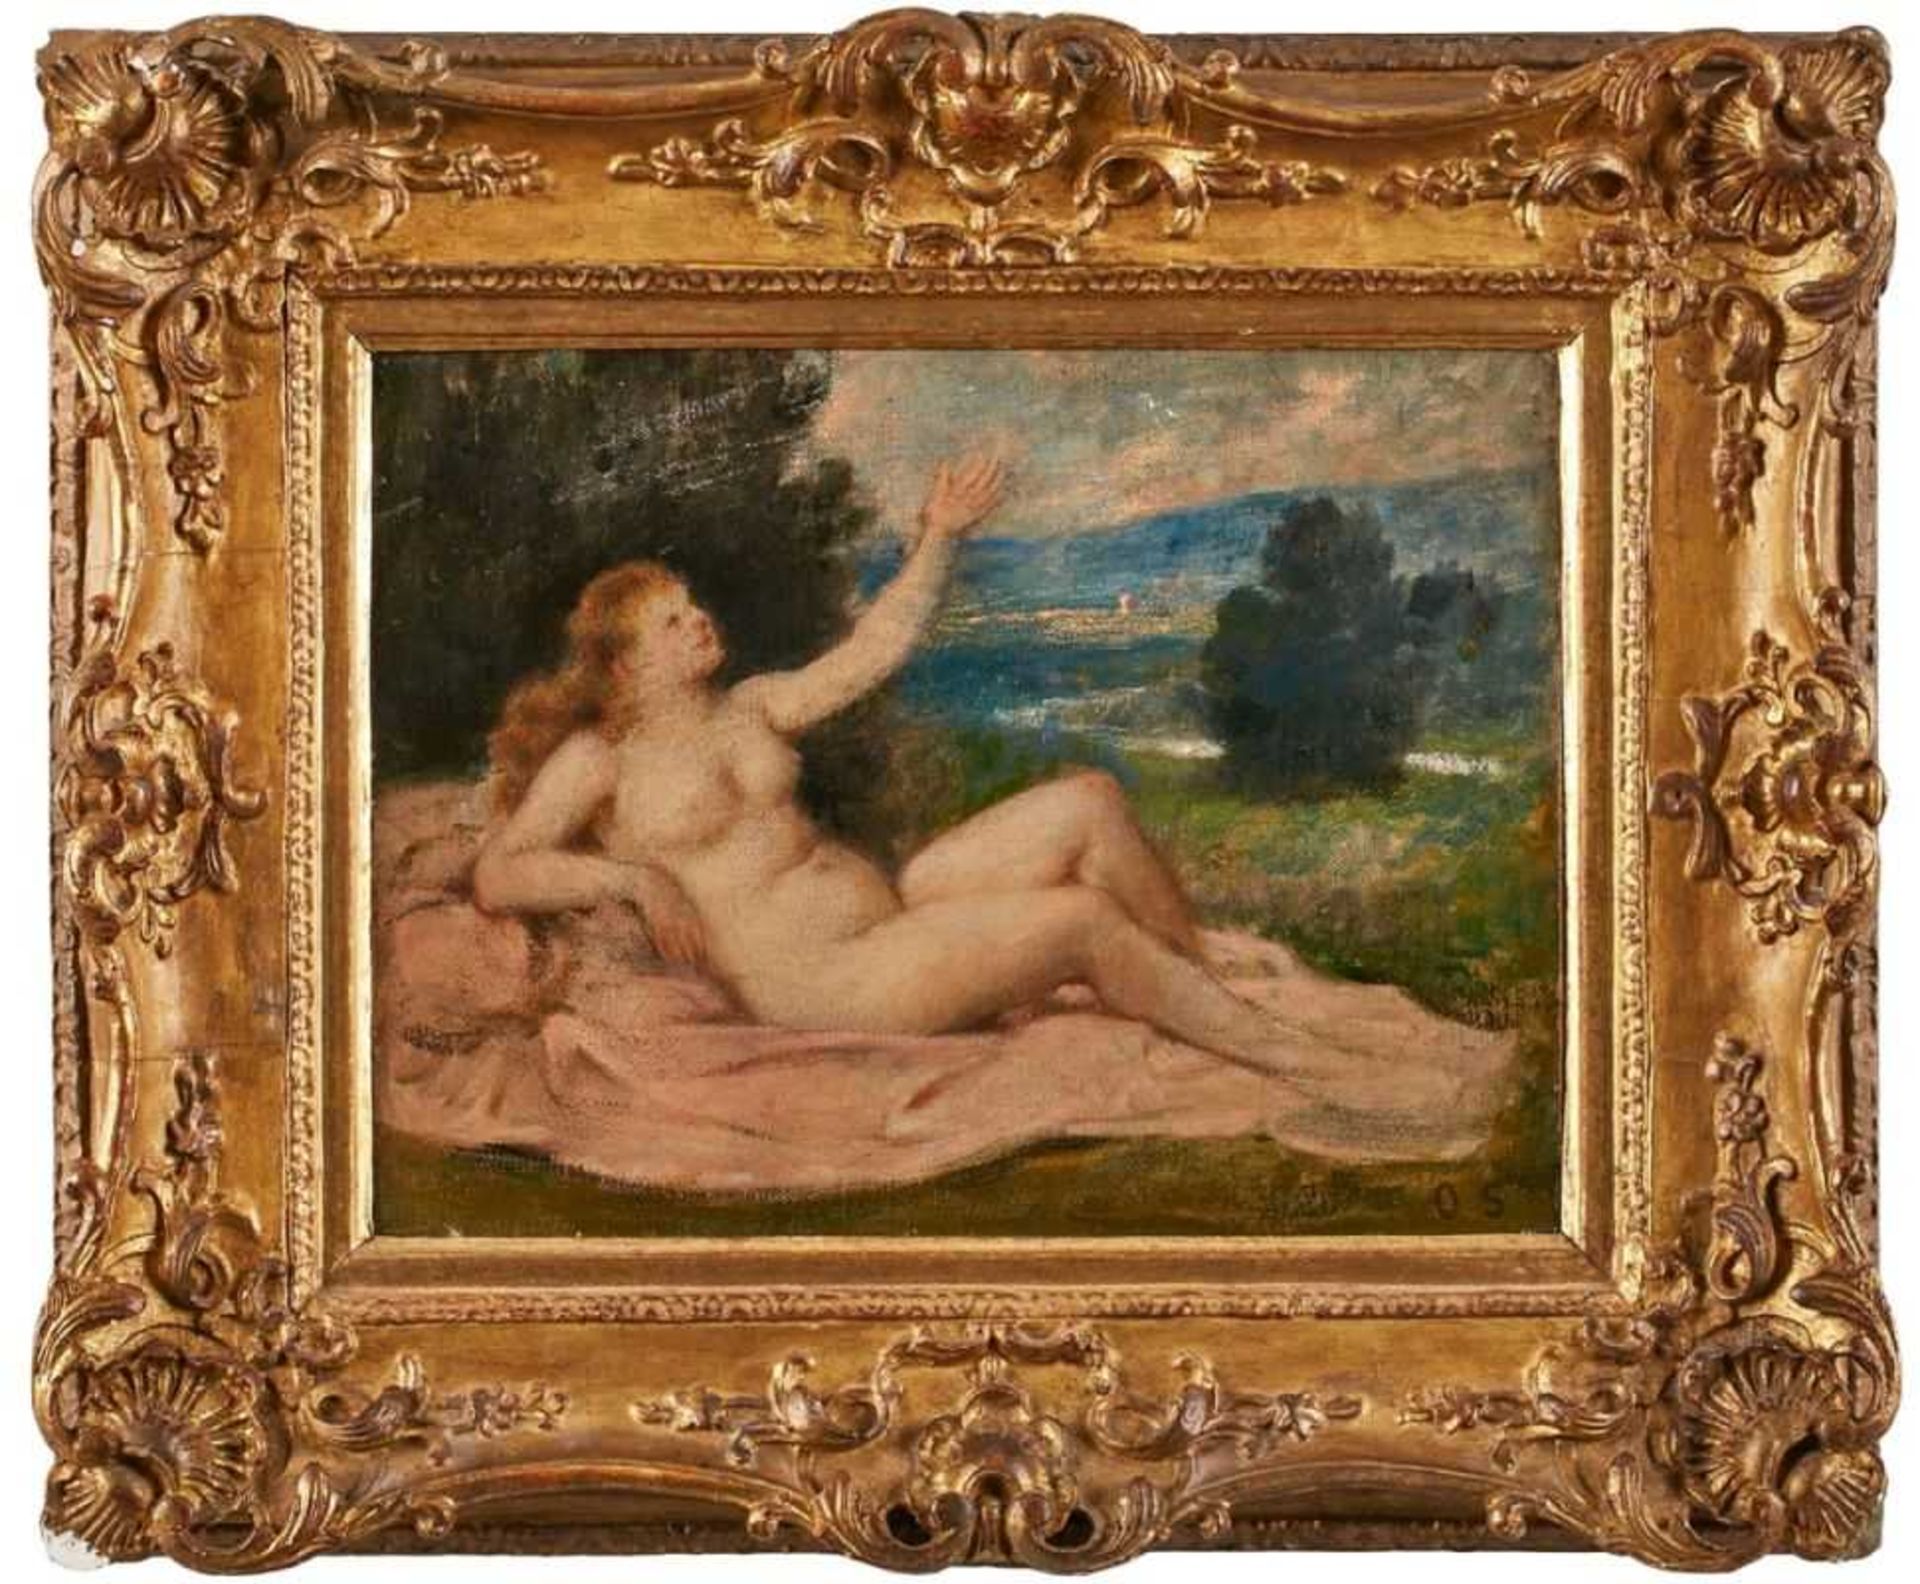 Gemälde Otto Scholderer1834 Frankfurt - 1902 Frankfurt "Danae" u. re. monogr. O.S. verso Stempel &